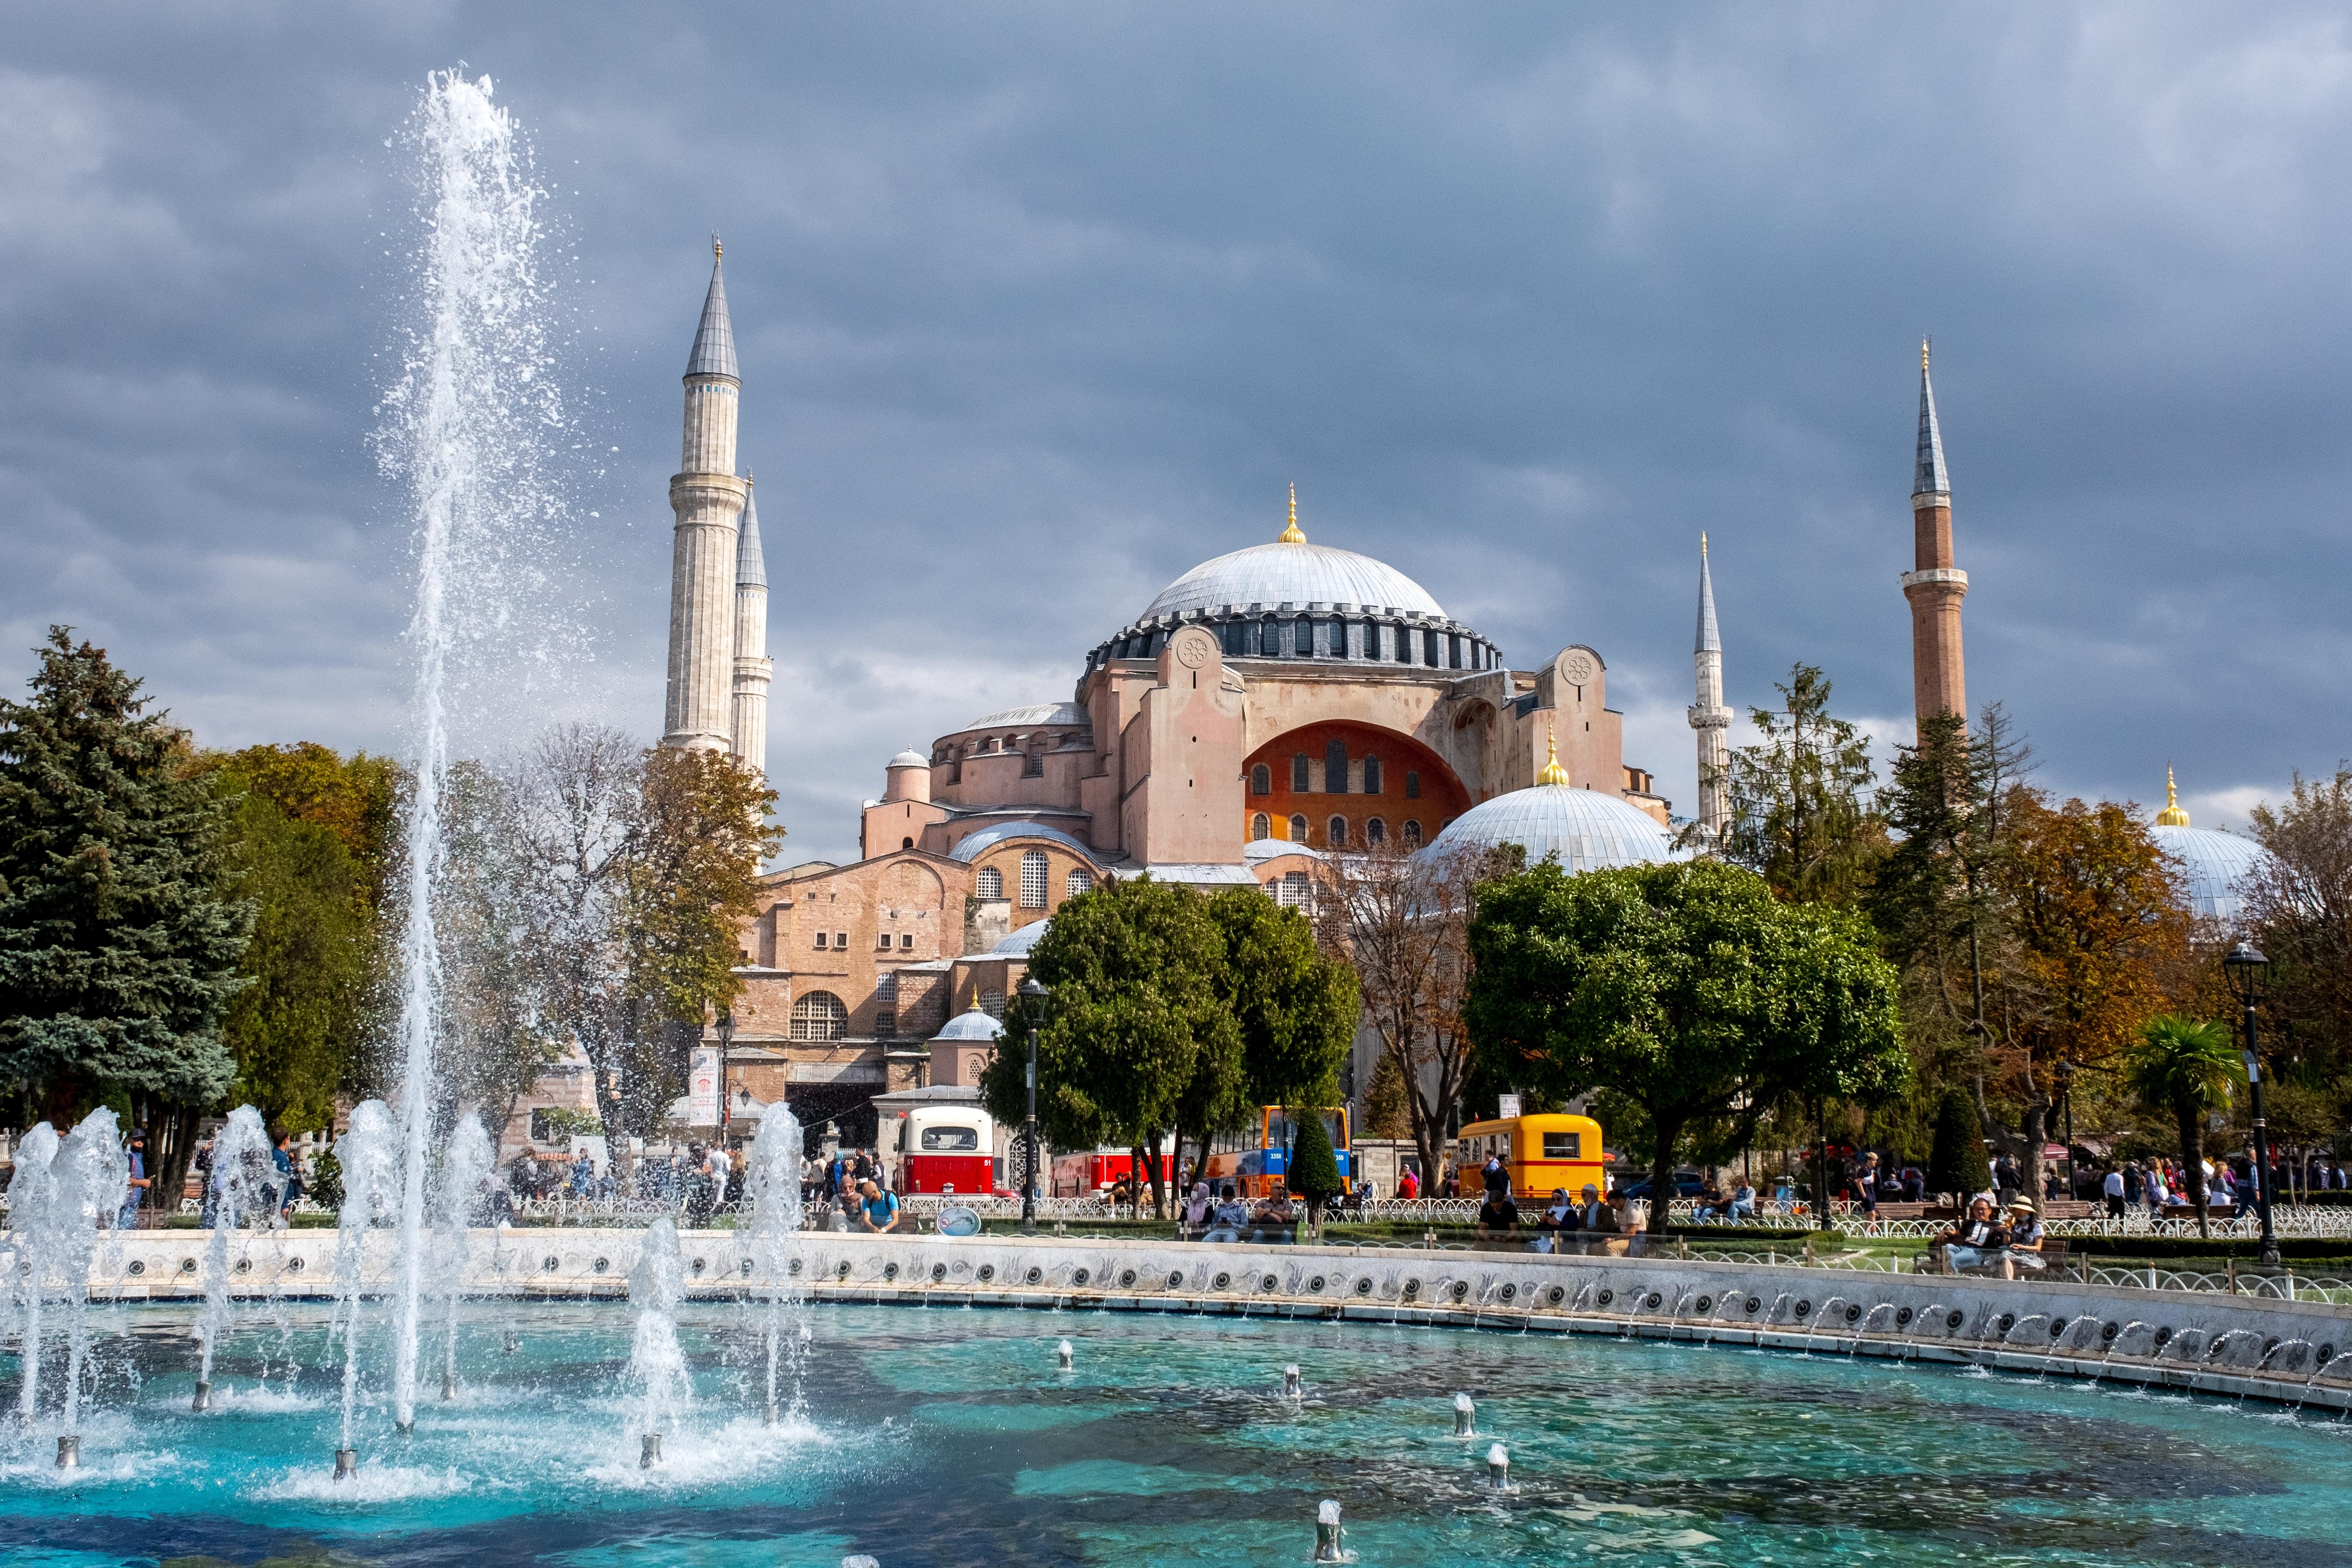 Hagia Sophia History